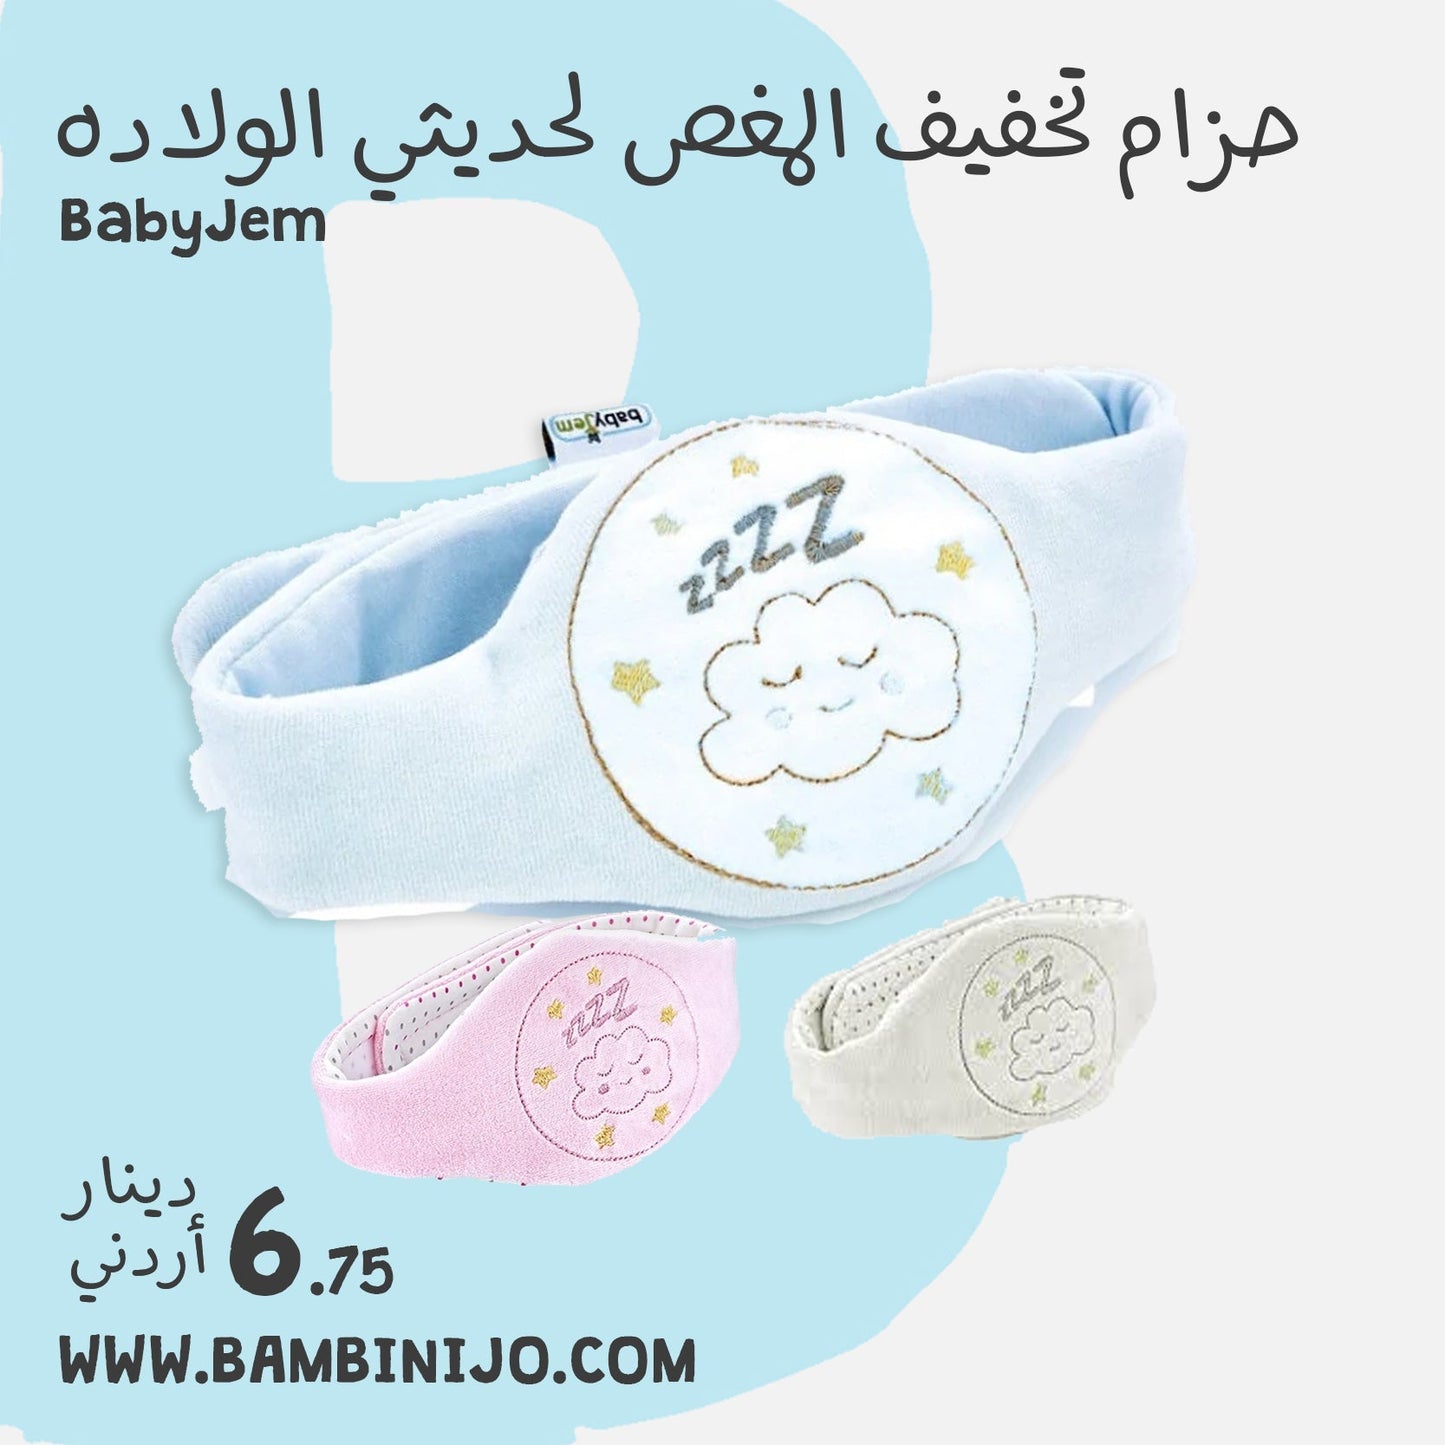 BabyJem - Cherry Core Filled Colic Belt - Mint - BambiniJO | Buy Online | Jordan